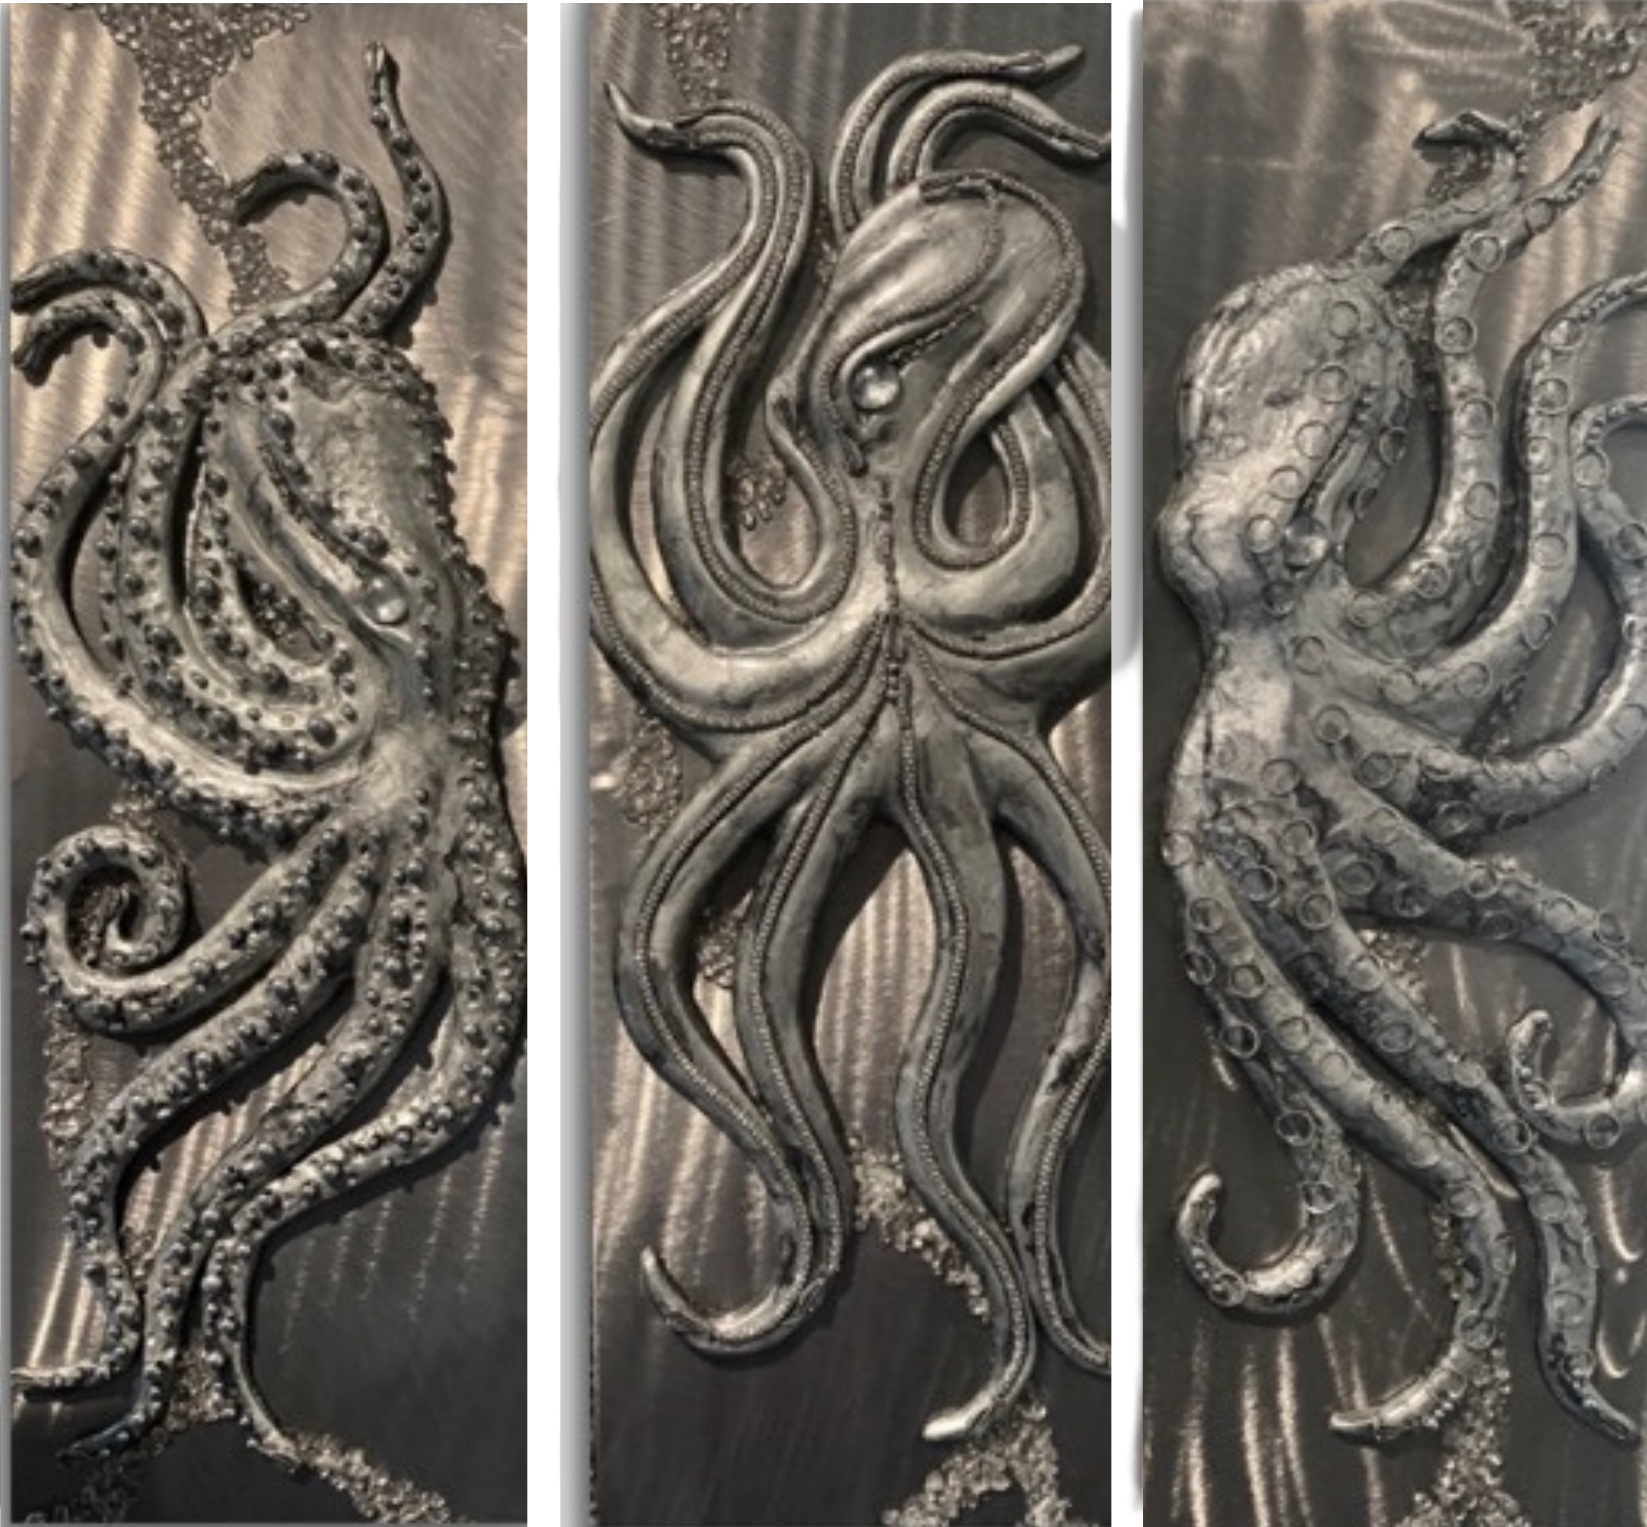 Lisa herr   octopus triptych original bas relief sculpture resin unique 3d metal lahaina front street gallery evo art maui hawaii 2 krpfwm